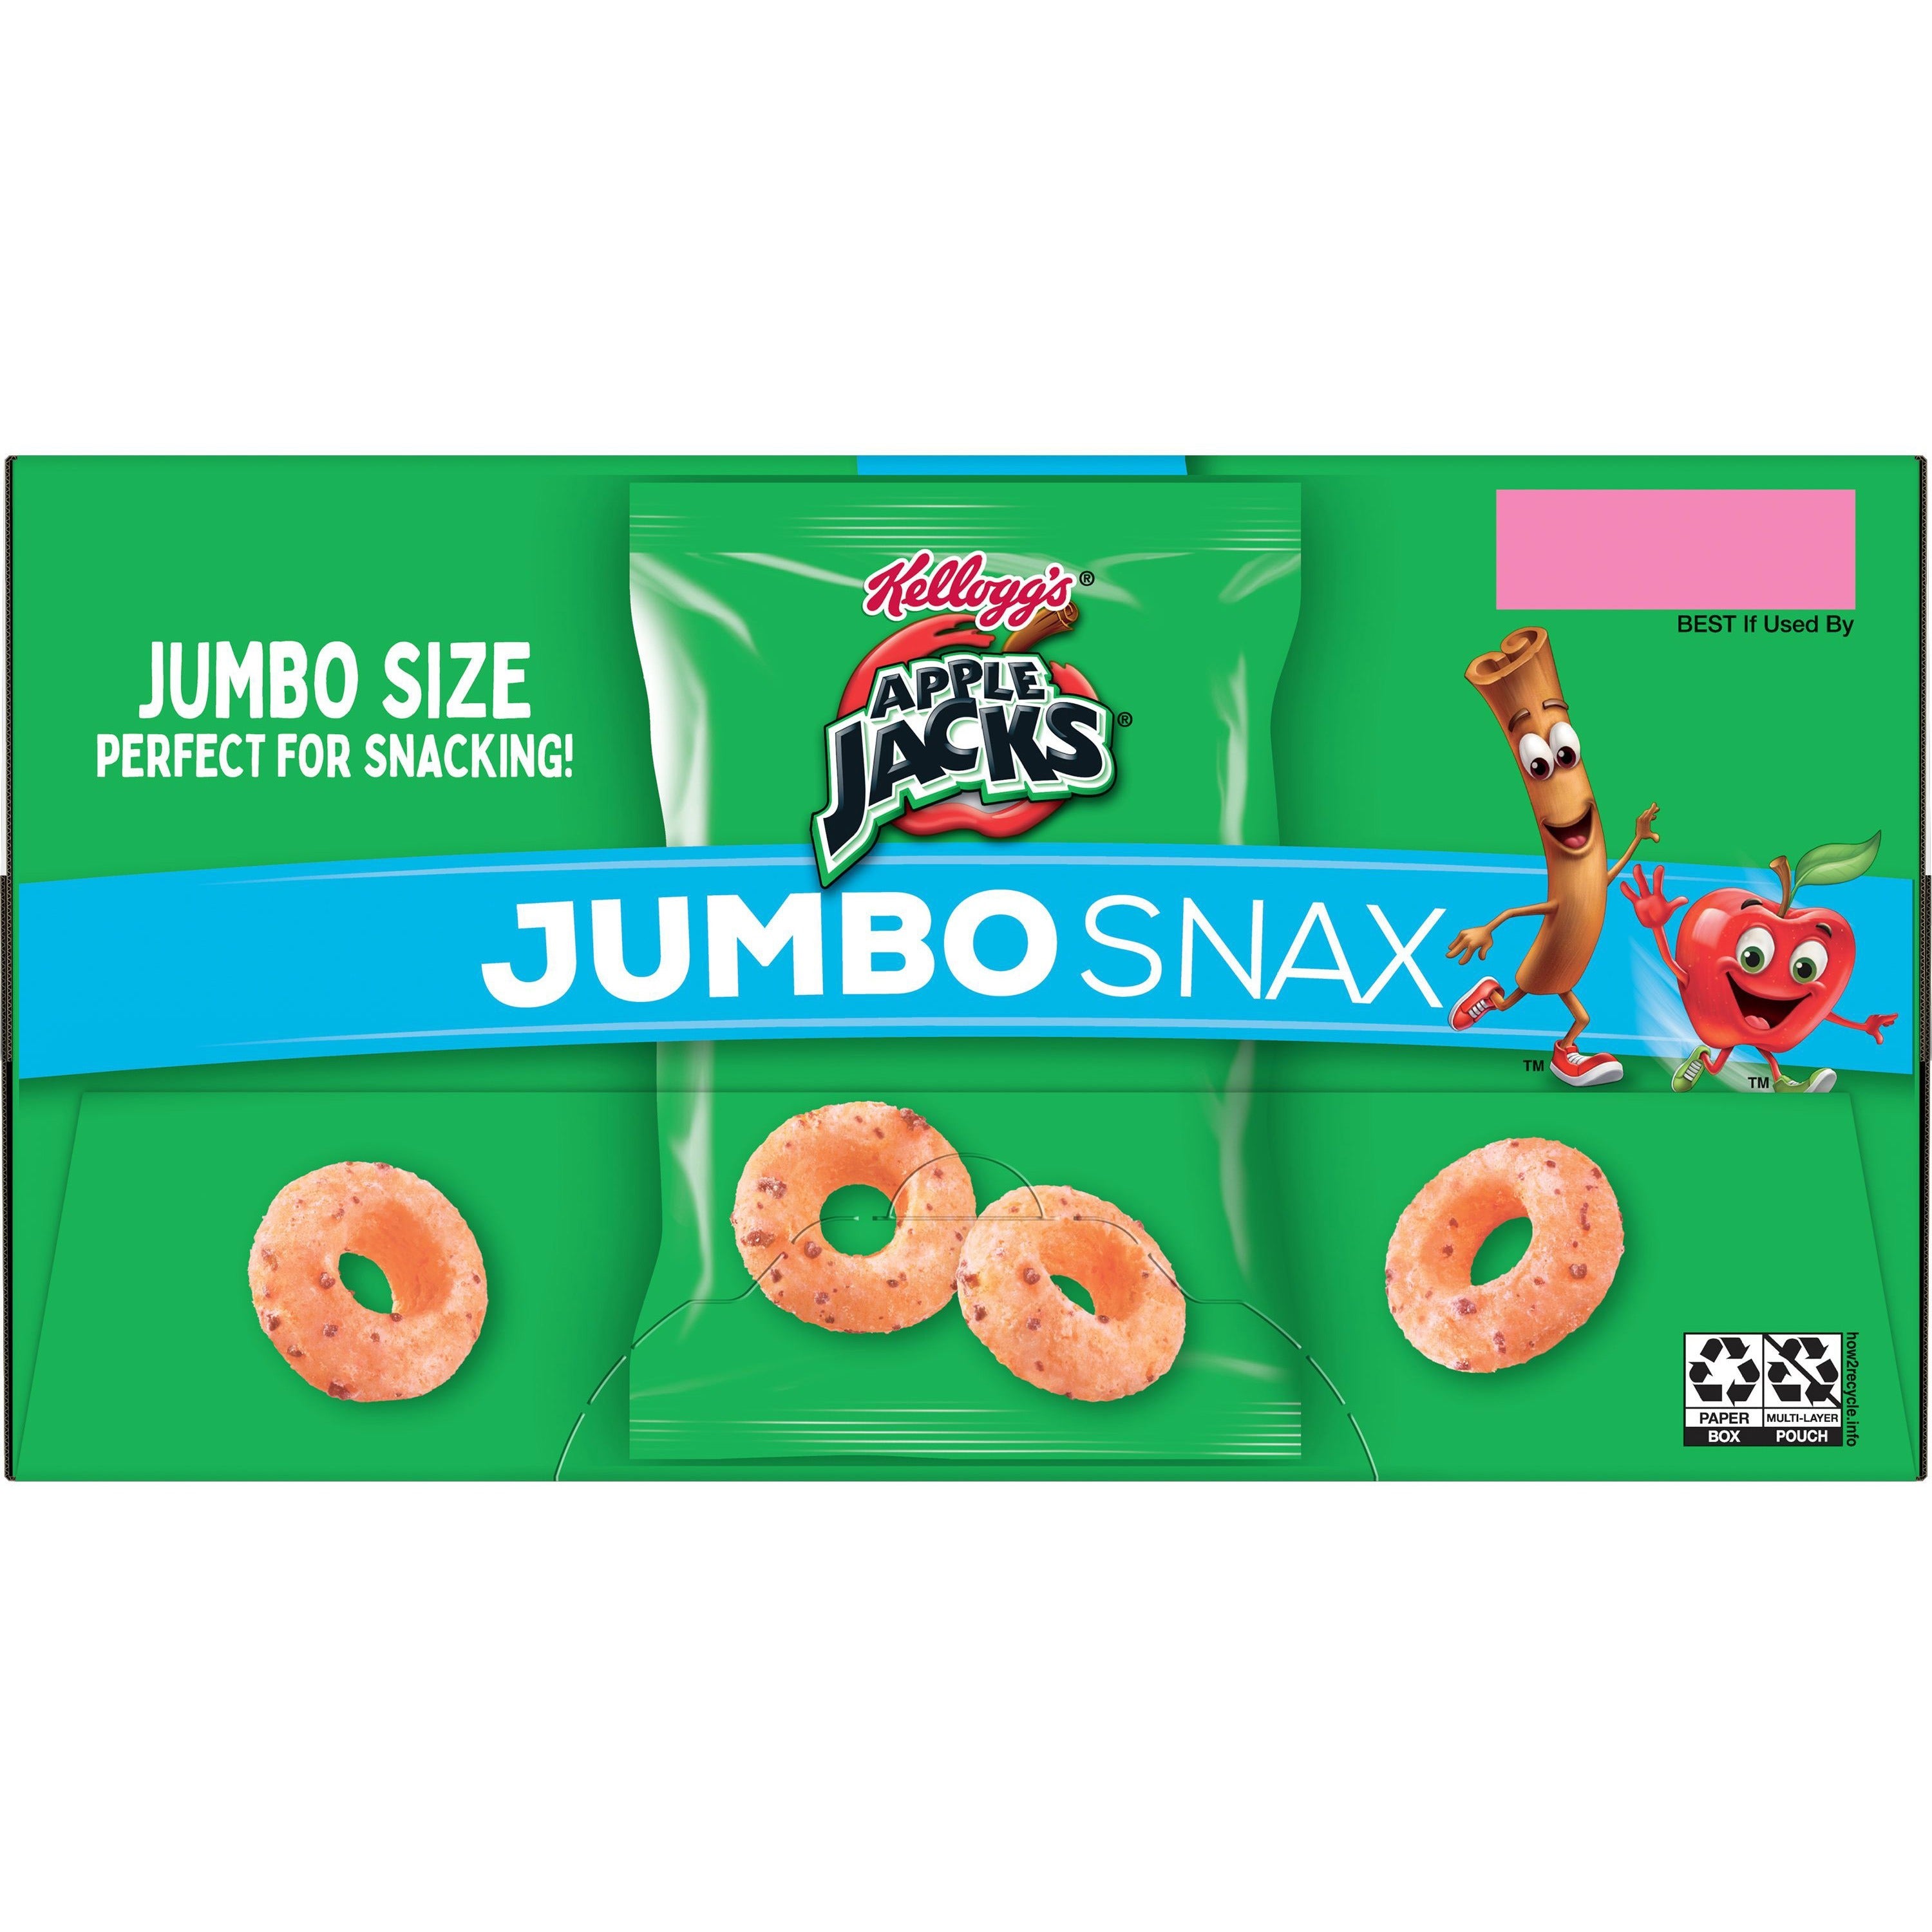 apple-jacks-jumbo-snax-cereal-snack-no-high-fructose-corn-syrup-apples-&-cinnamon-540-oz-12-box_keb23453 - 6